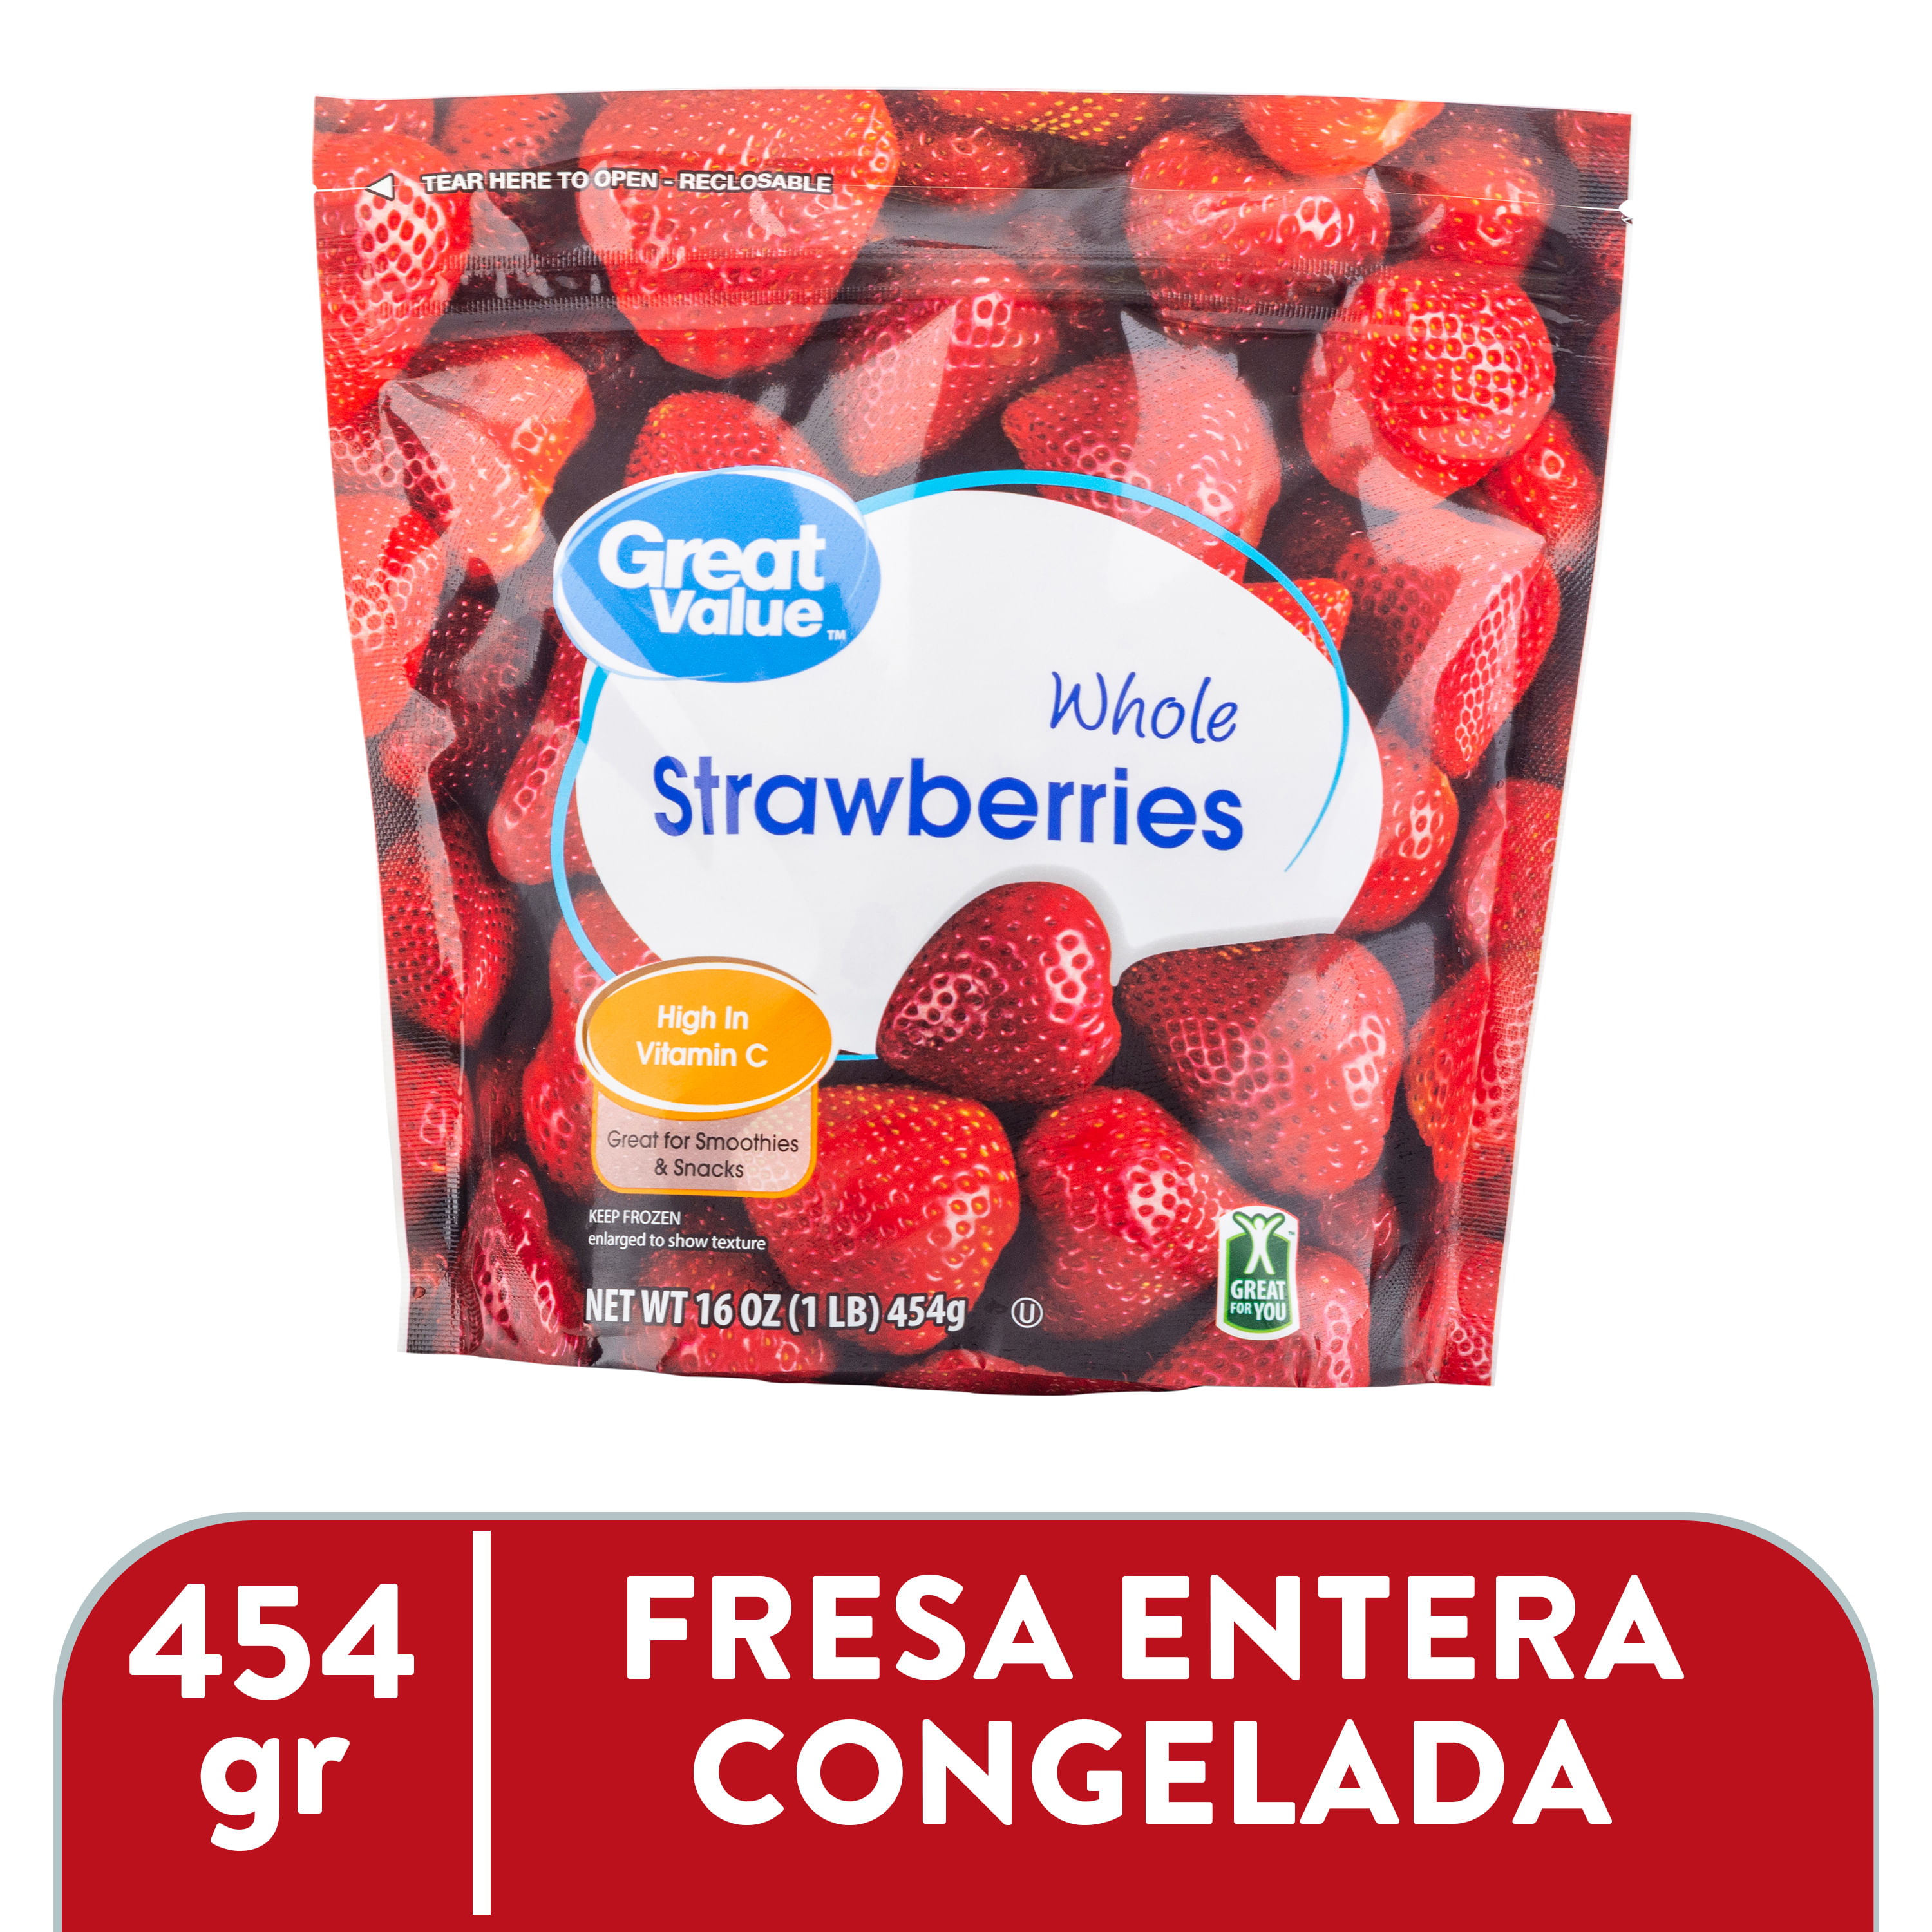 Fresas-Great-Value-Enteras-Congelada-454gr-1-7757